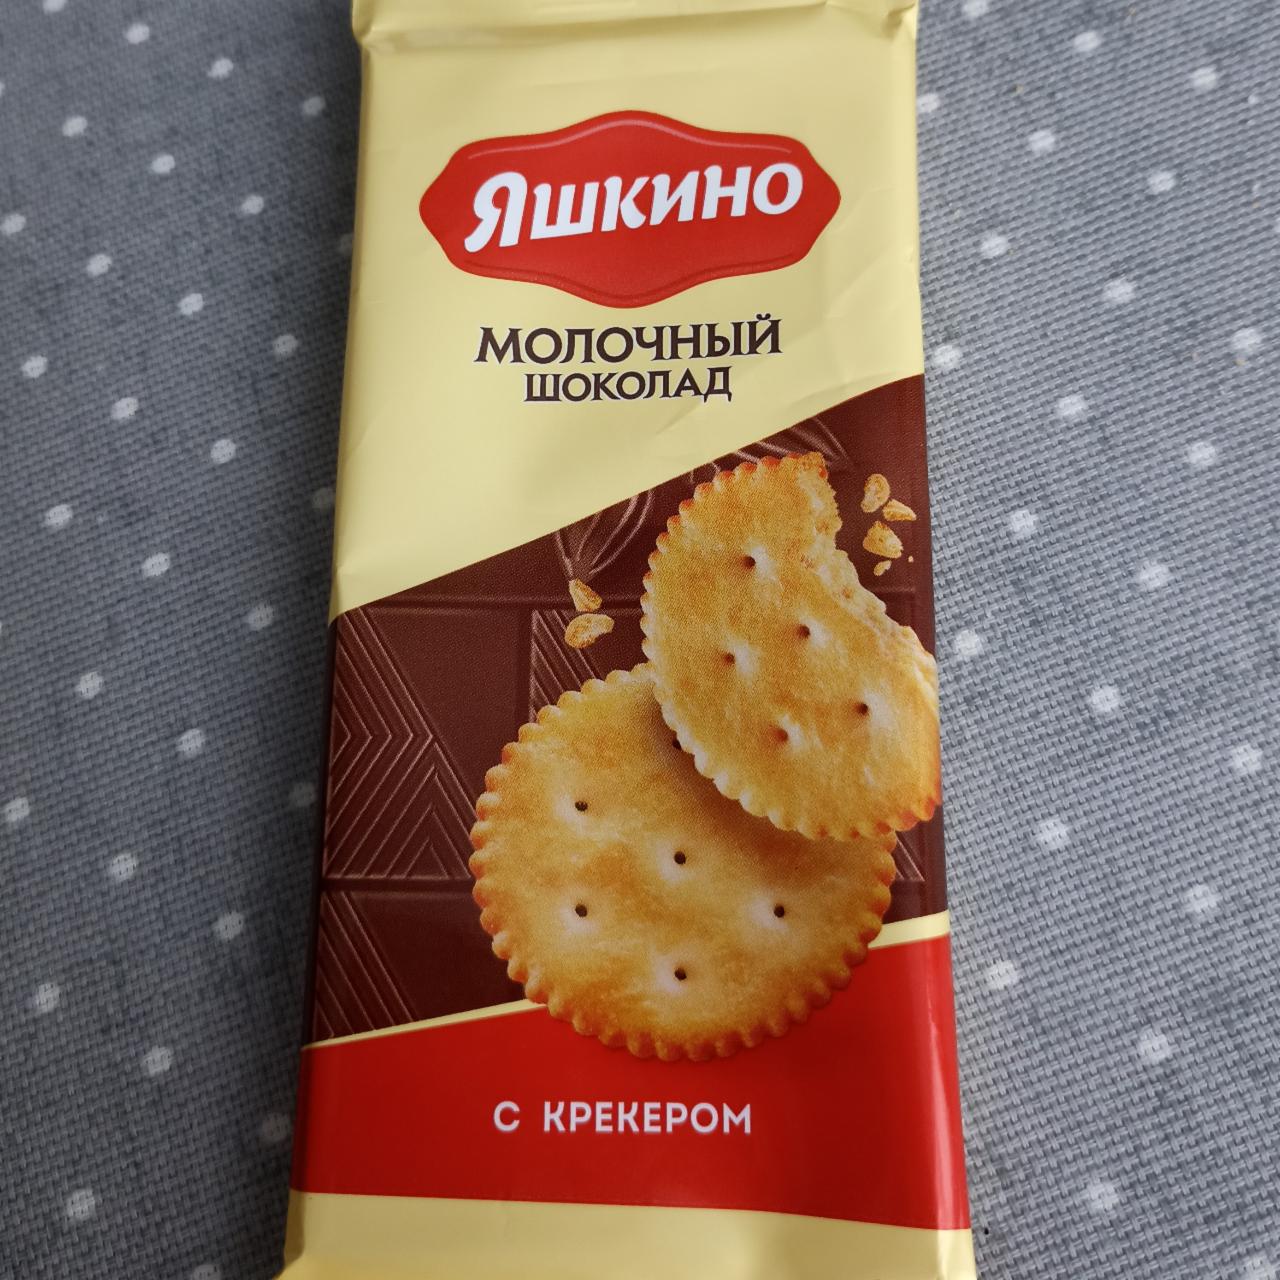 Фото - Молочный шоколад с крекером Яшкино